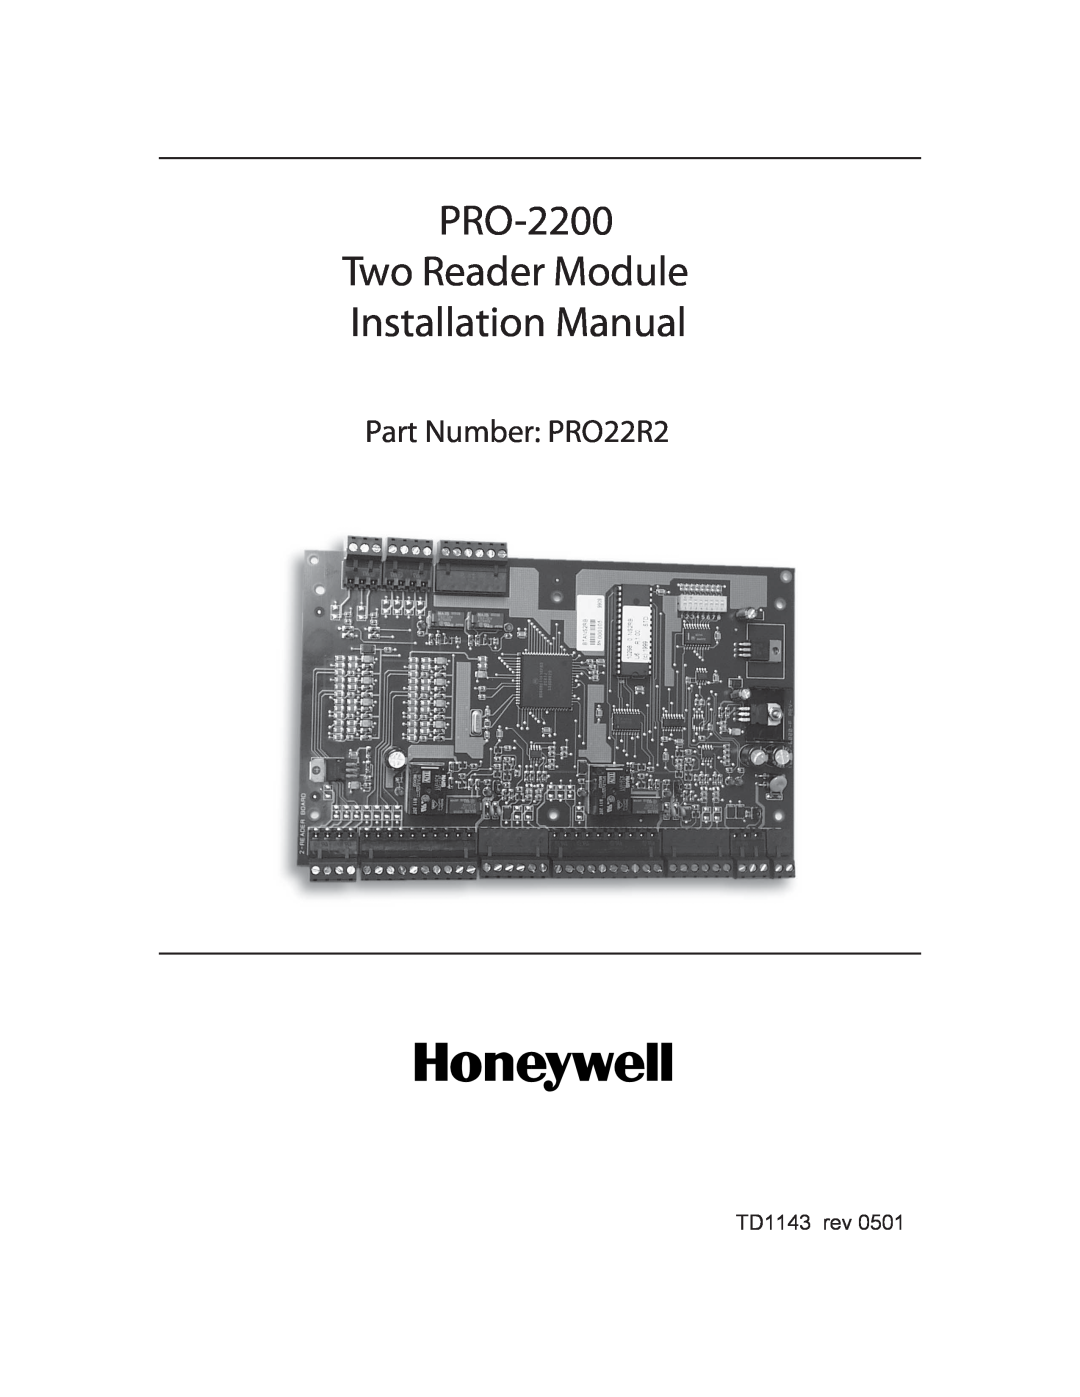 Honeywell installation manual PRO-2200 Two Reader Module Installation Manual, Part Number PRO22R2 